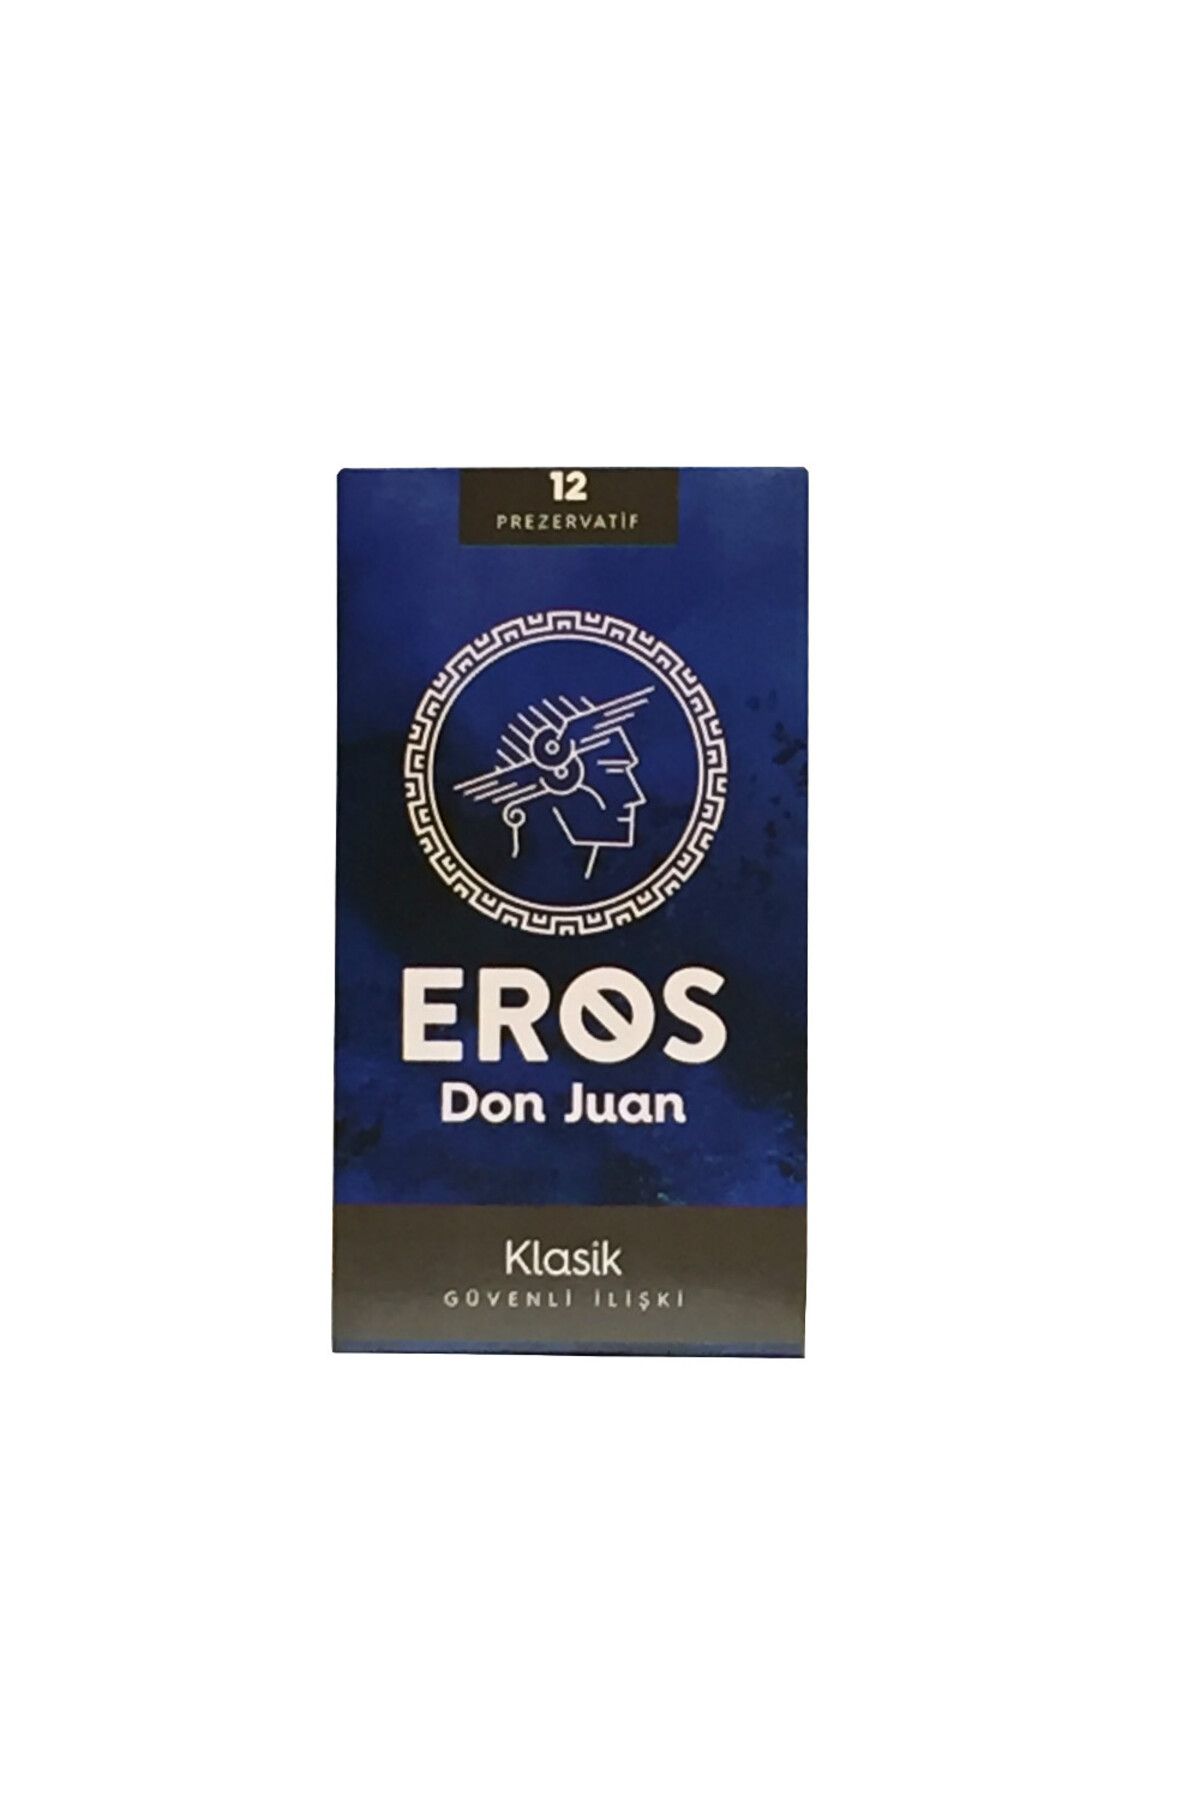 Eros Don Juan Prezervatif Klasik 12 li